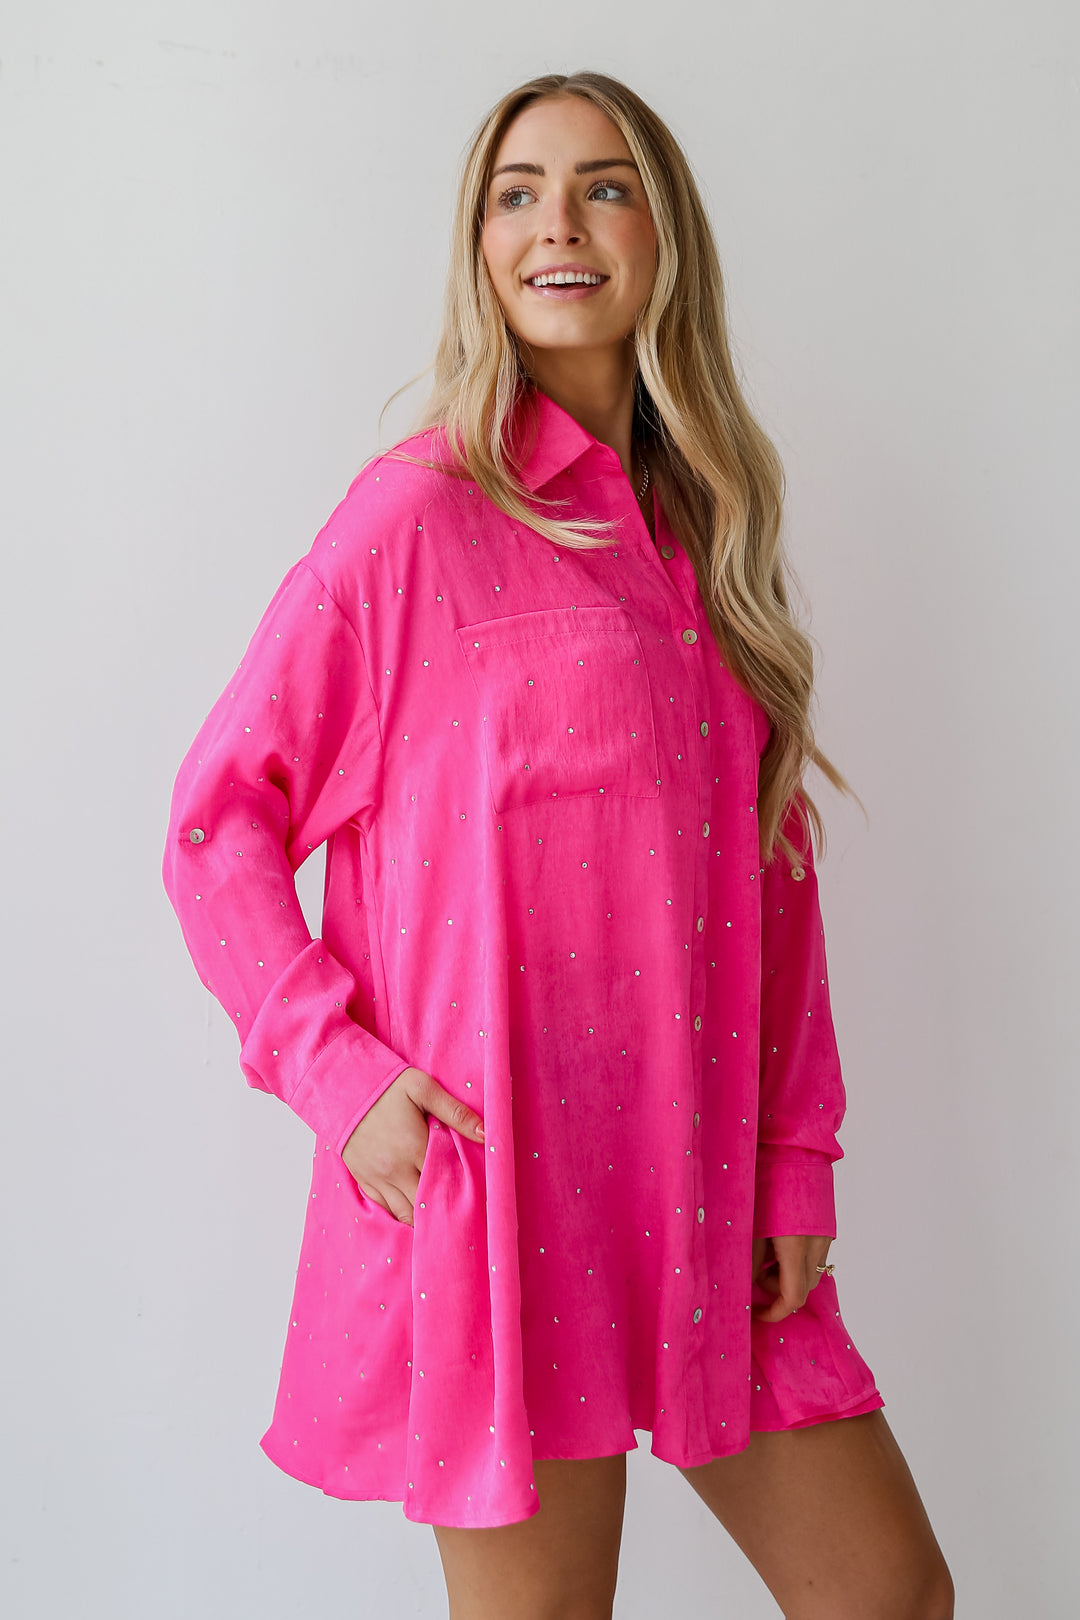 sparkly Fuchsia Satin Rhinestone Mini Dress.  Cheap Dresses. Online cheap dresses. Pink Dress. Online Women's Boutique